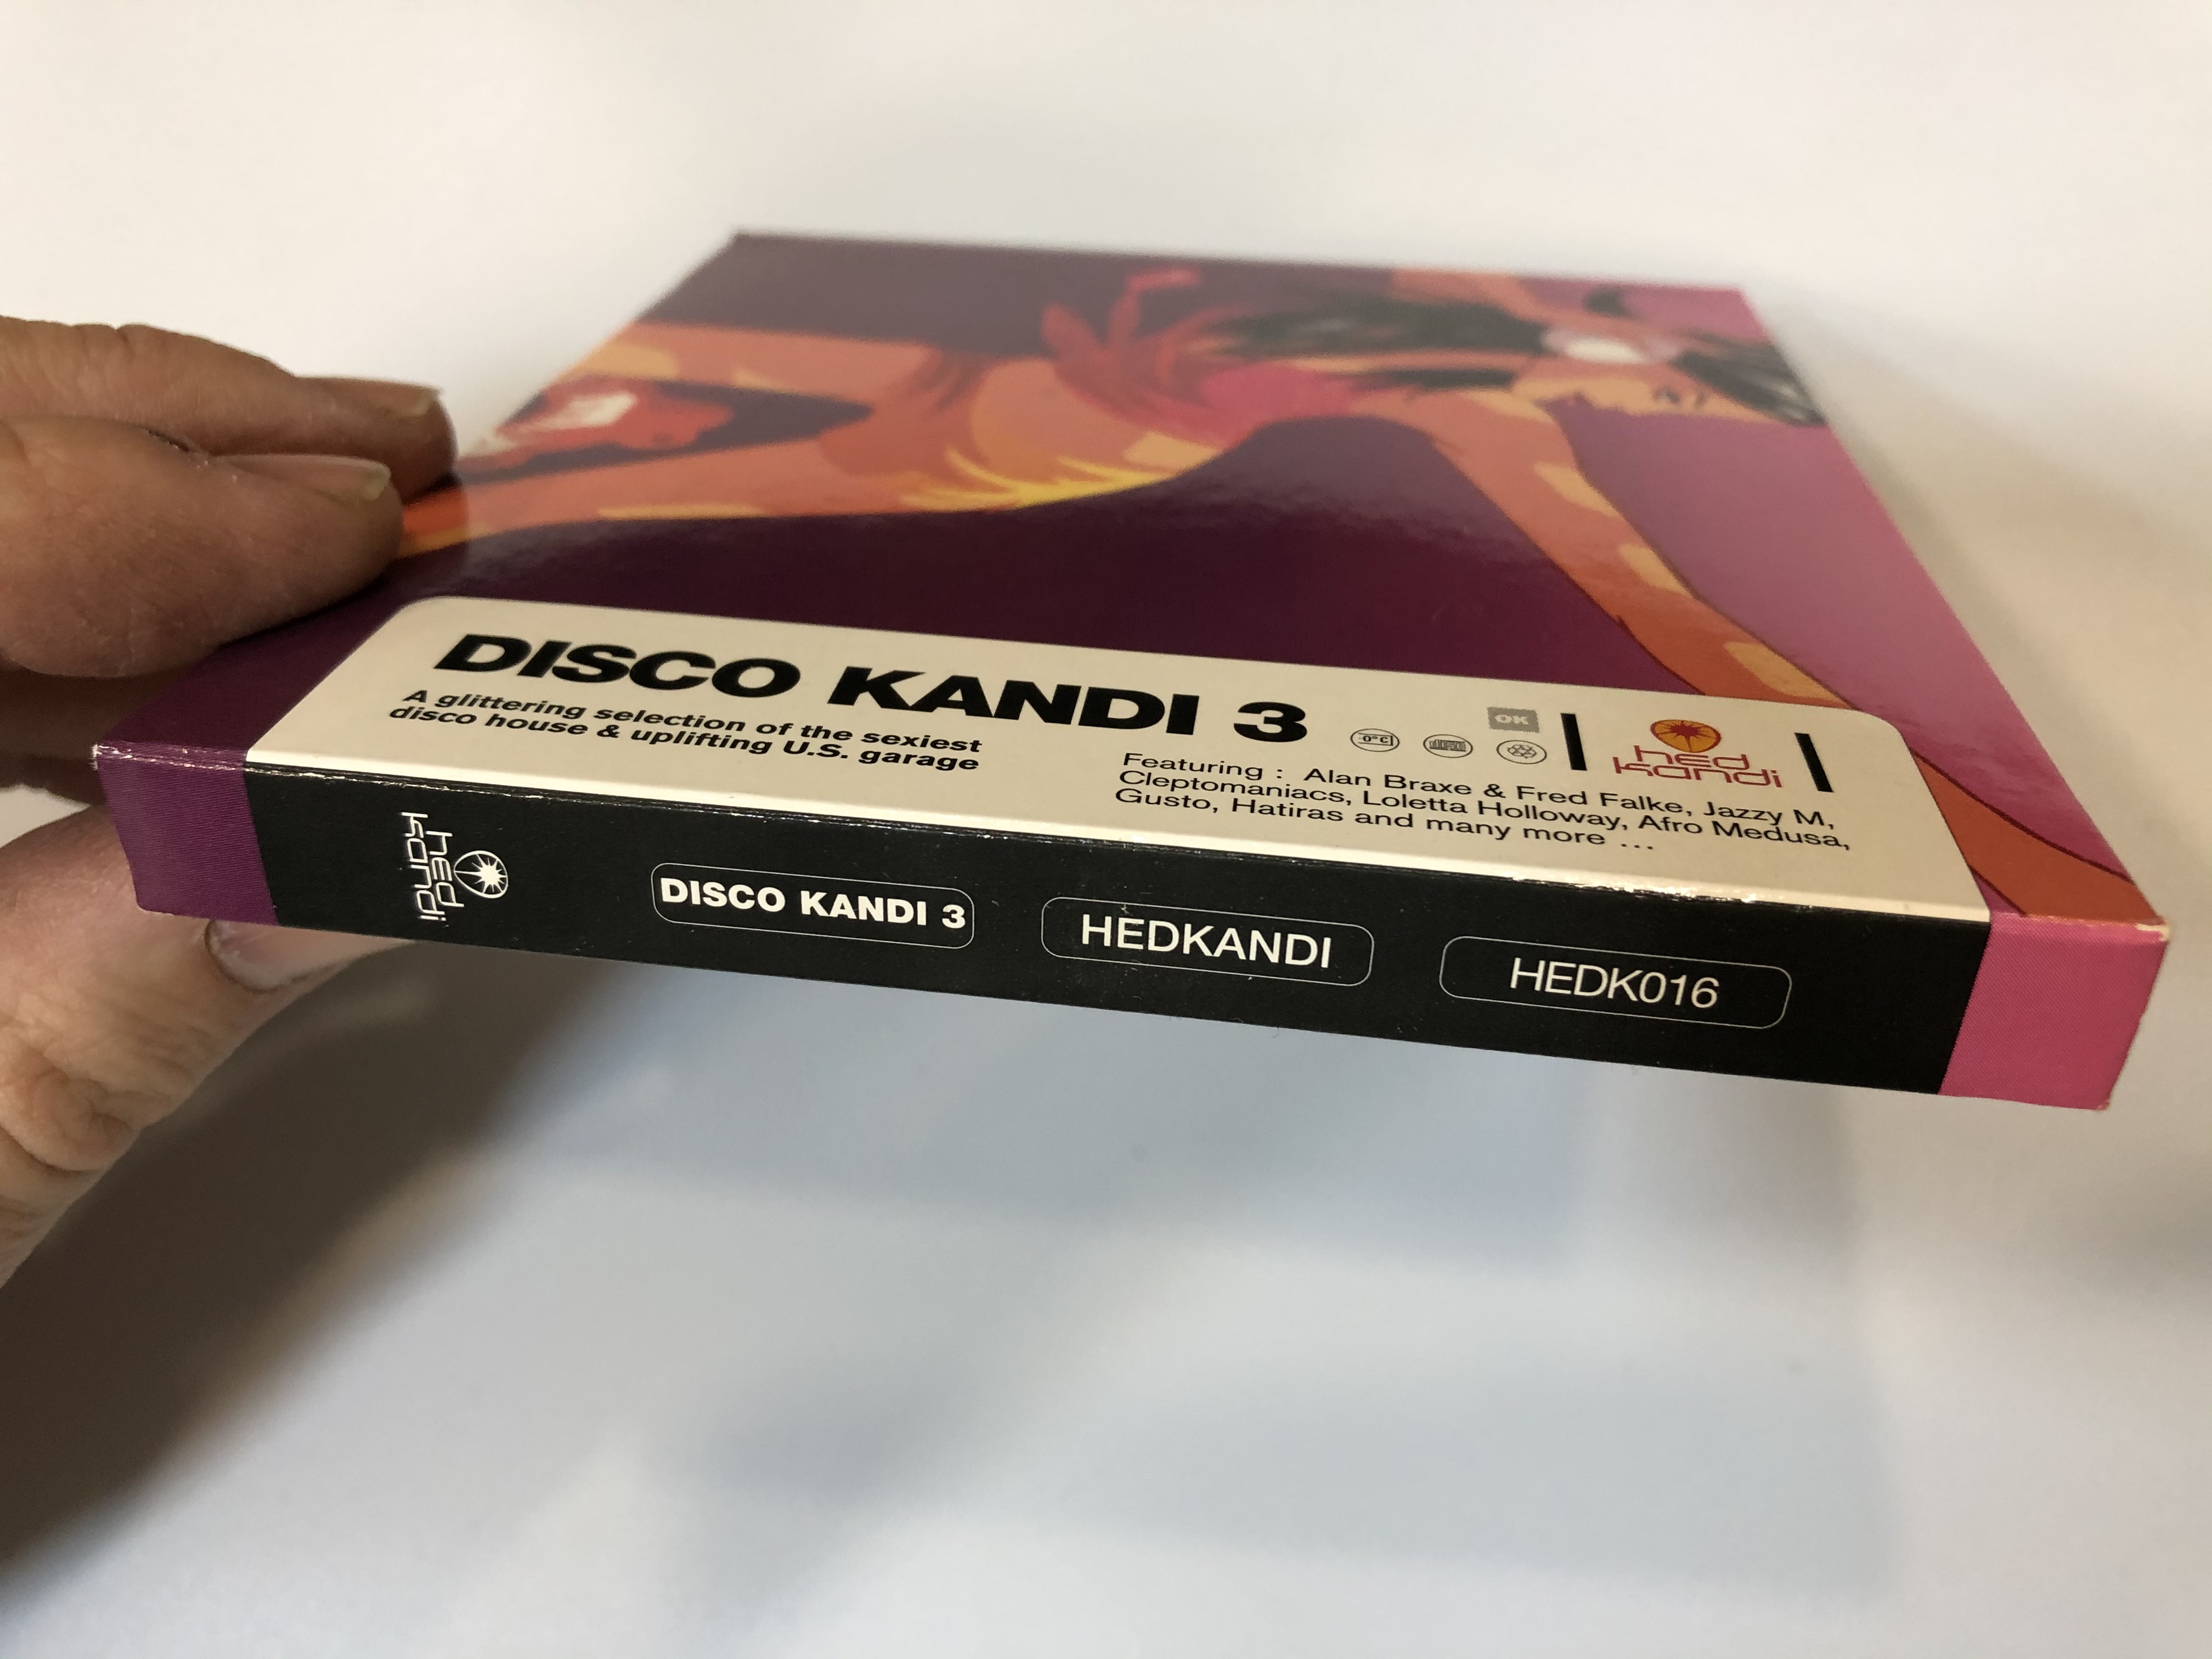 disco-kandi-3-featuring-alan-braxe-fred-falke-jazzy-m-cleptomaniacs-loletta-holloway-afro-medusa-gusto-hatiras-and-many-more...-hed-kandi-2x-audio-cd-2001-hedk016-3-.jpg